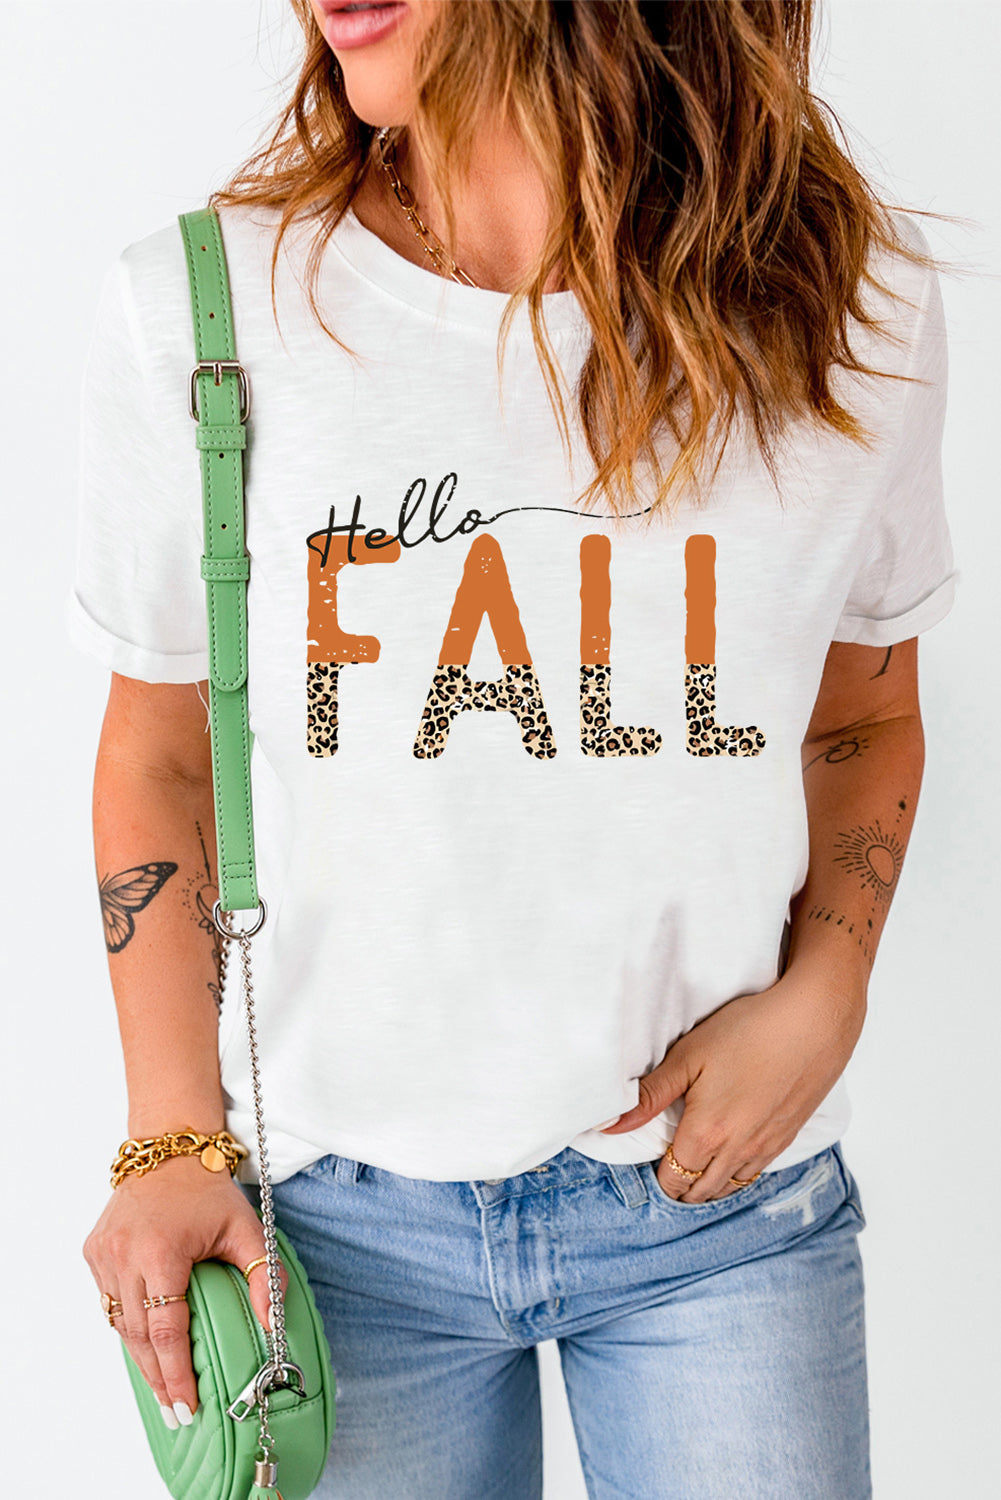 HELLO FALL Graphic Tee - Babbazon t-shirt